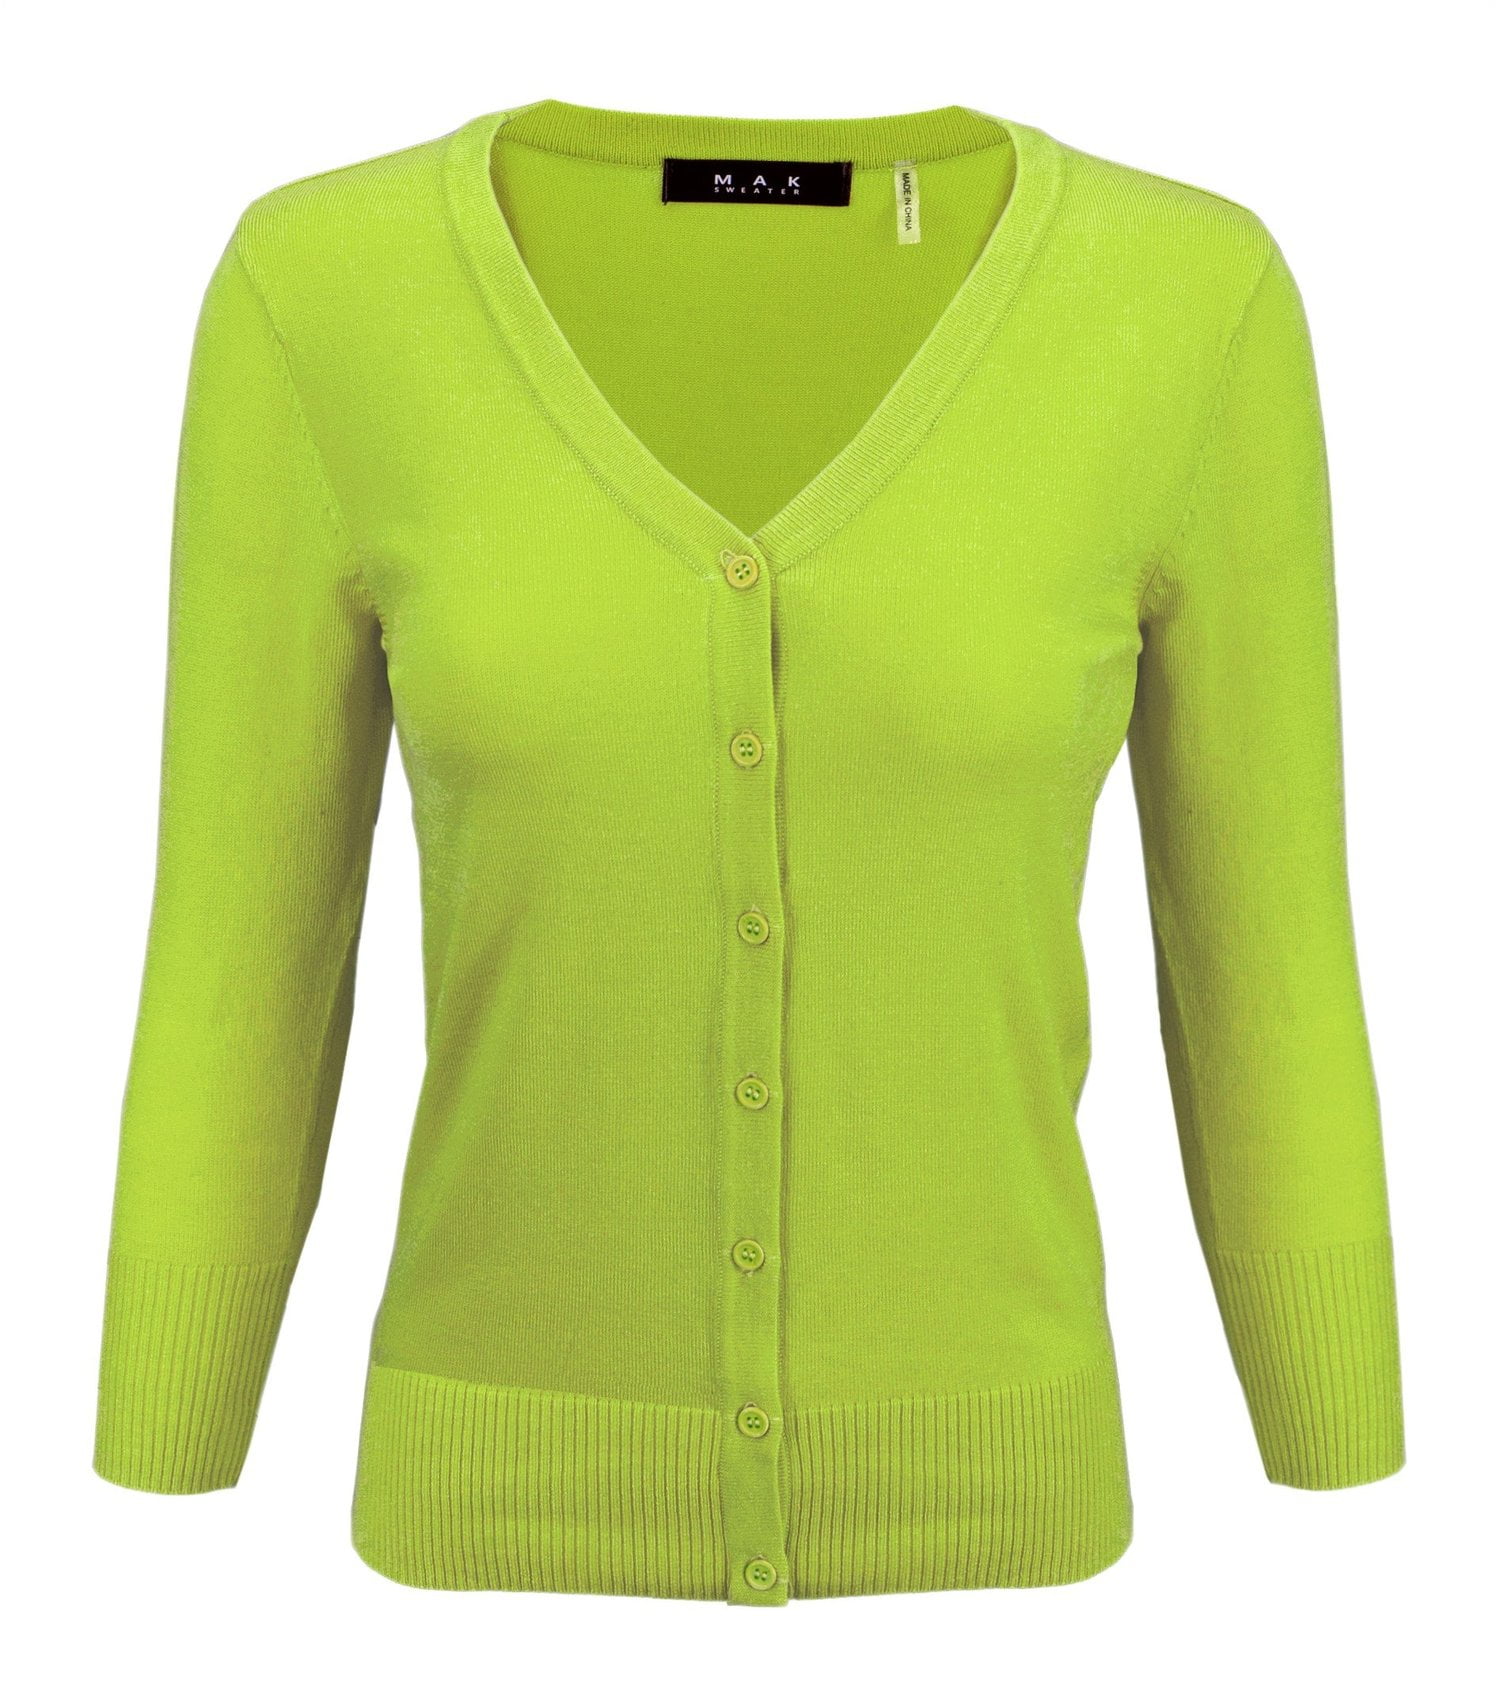 YEMAK Women's Knit Cardigan Sweater – 3/4 Sleeve V-Neck Basic Classic Casual Button Down Soft Lightweight Top